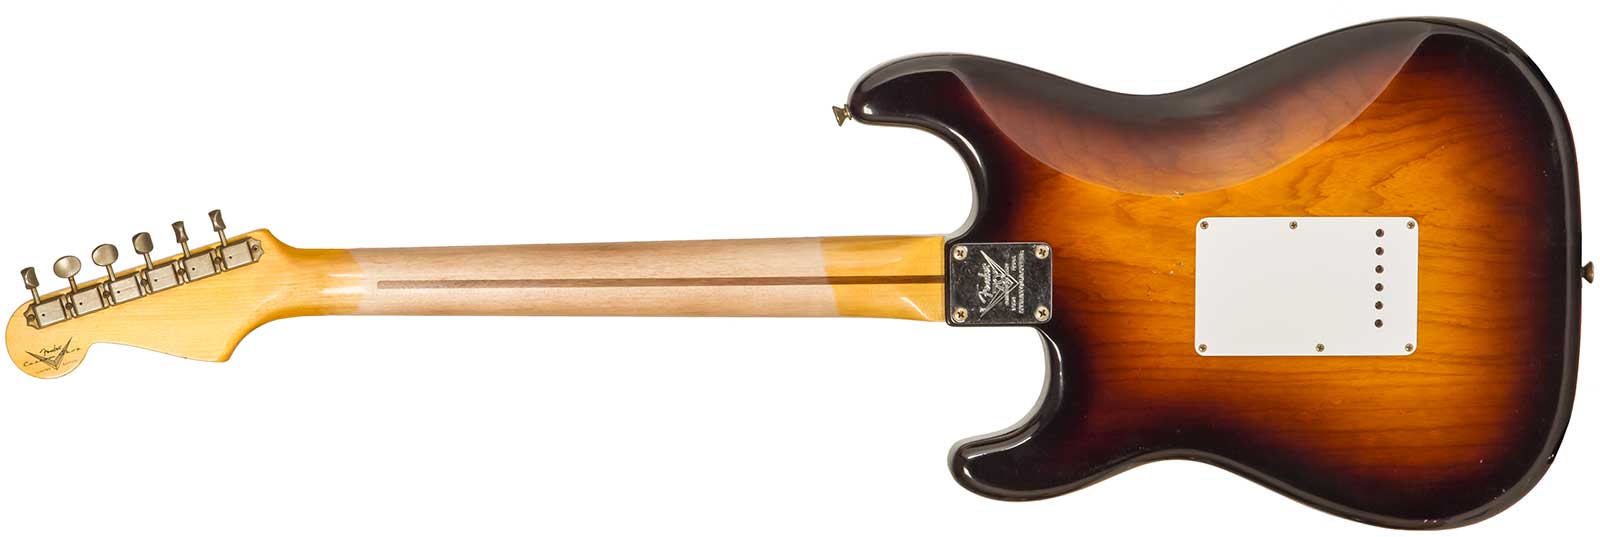 Fender Custom Shop Strat 1954 70th Anniv. 3s Trem Mn #xn4199 - Journeyman Relic Wide-fade 2-color Sunburst - Guitare Électrique Forme Str - Variation 